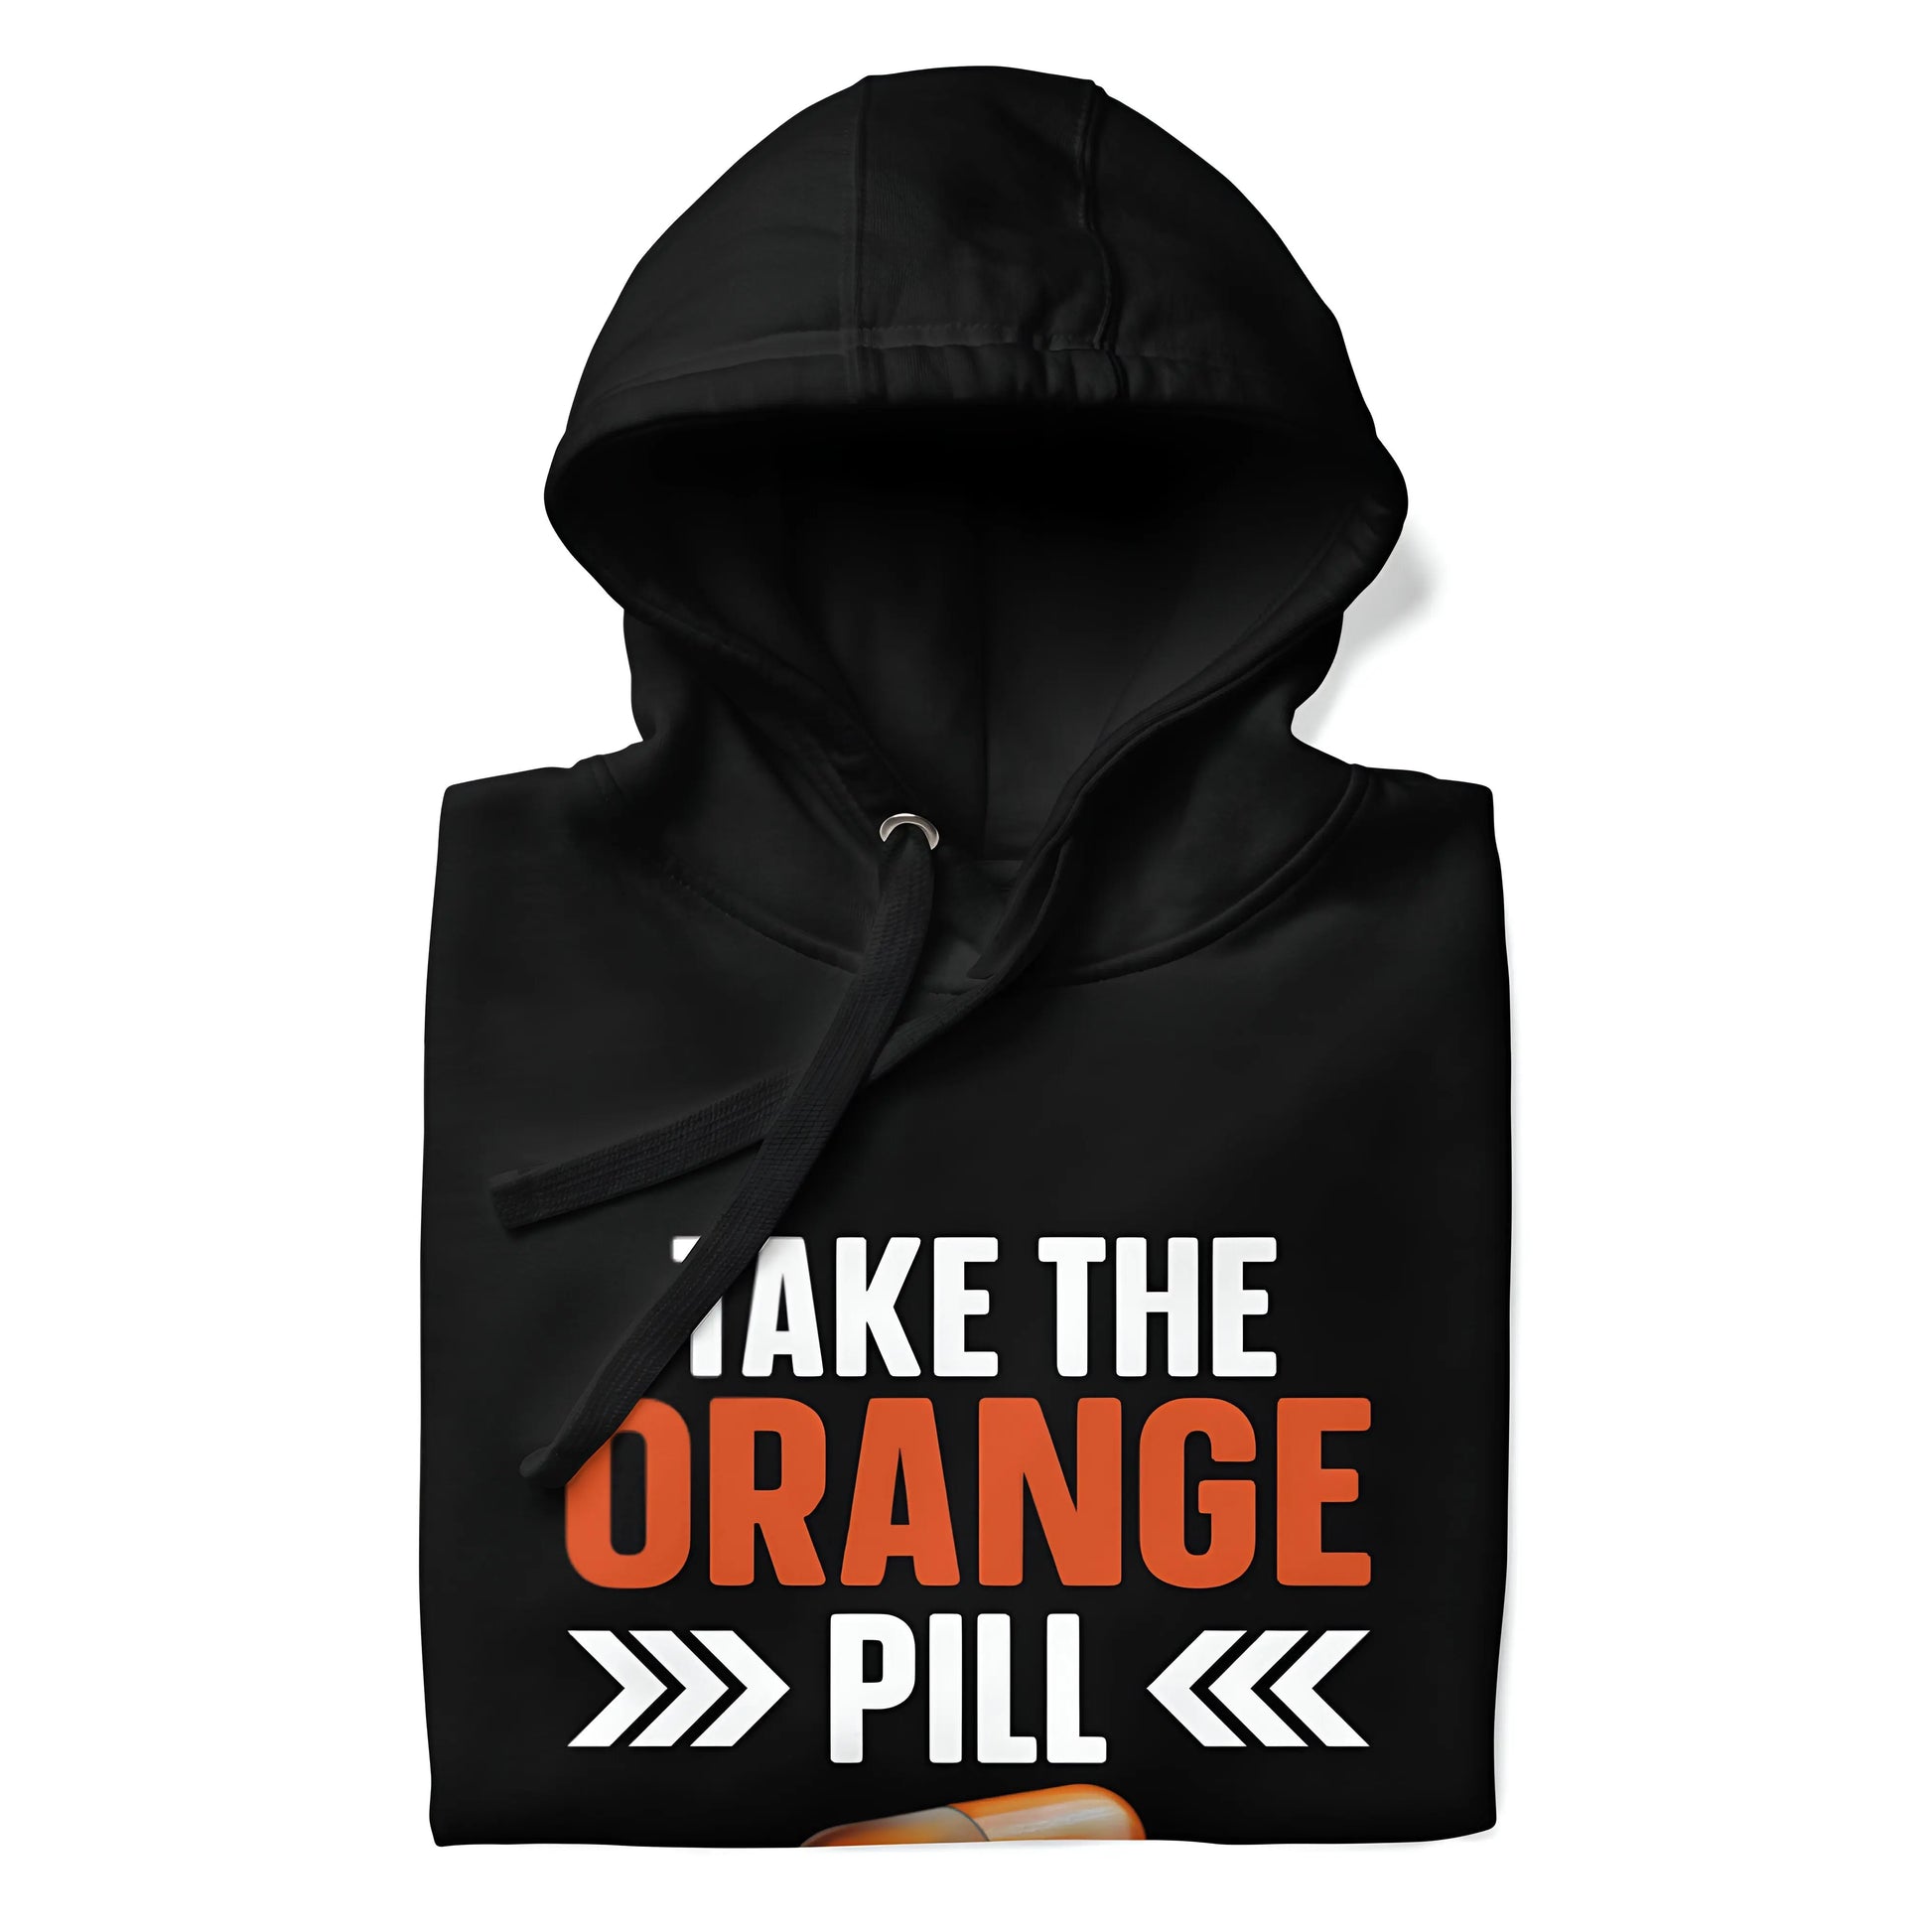 Take the Orange Pill - Premium Unisex Bitcoin Hoodie Black Color